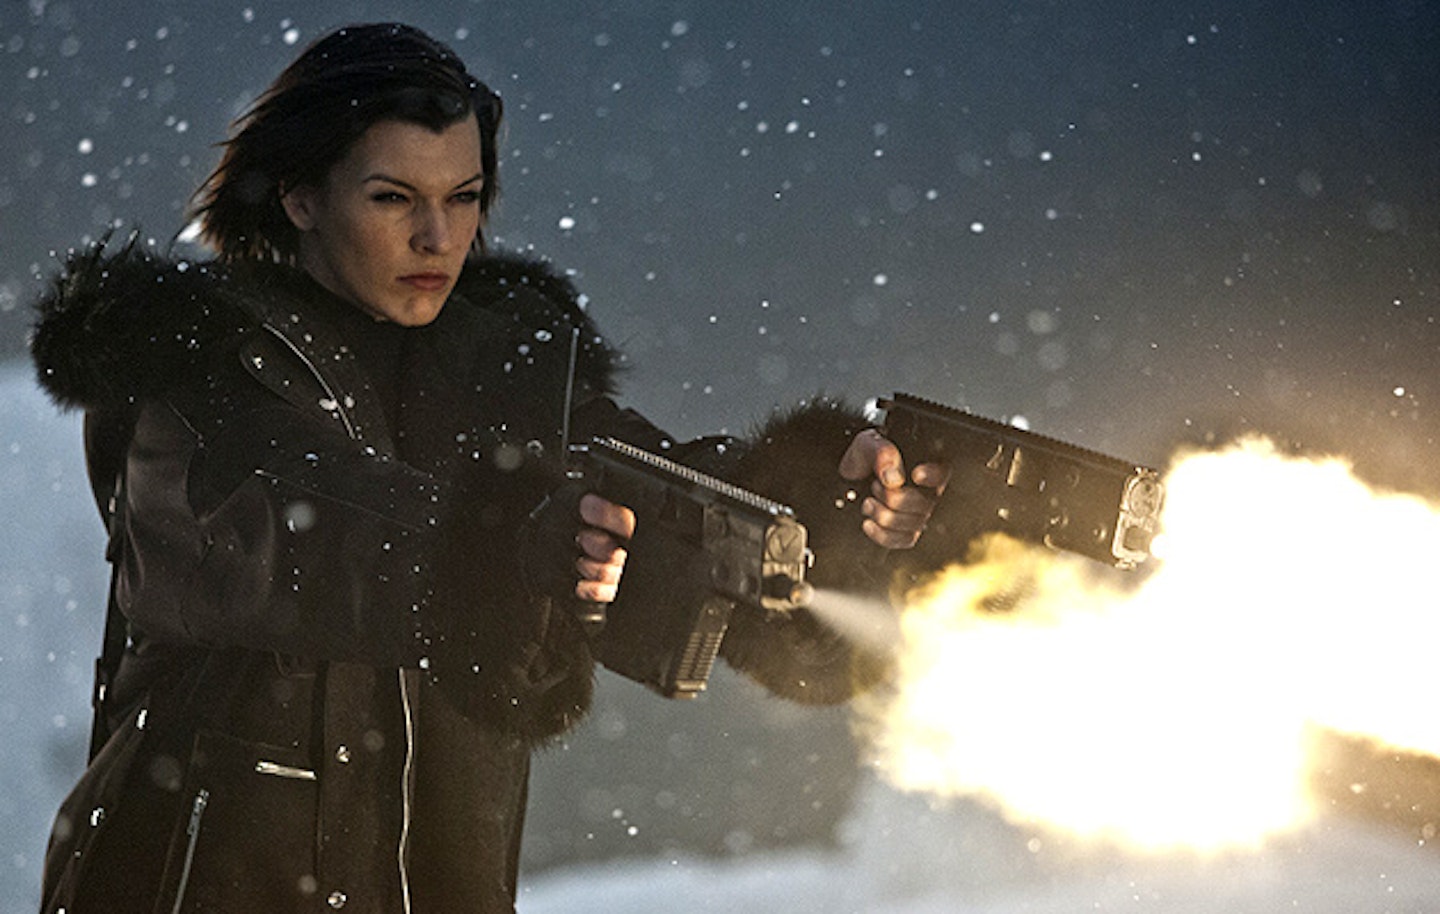  Resident Evil: Retribution : Milla Jovovich, Paul W.S.  Anderson: Movies & TV